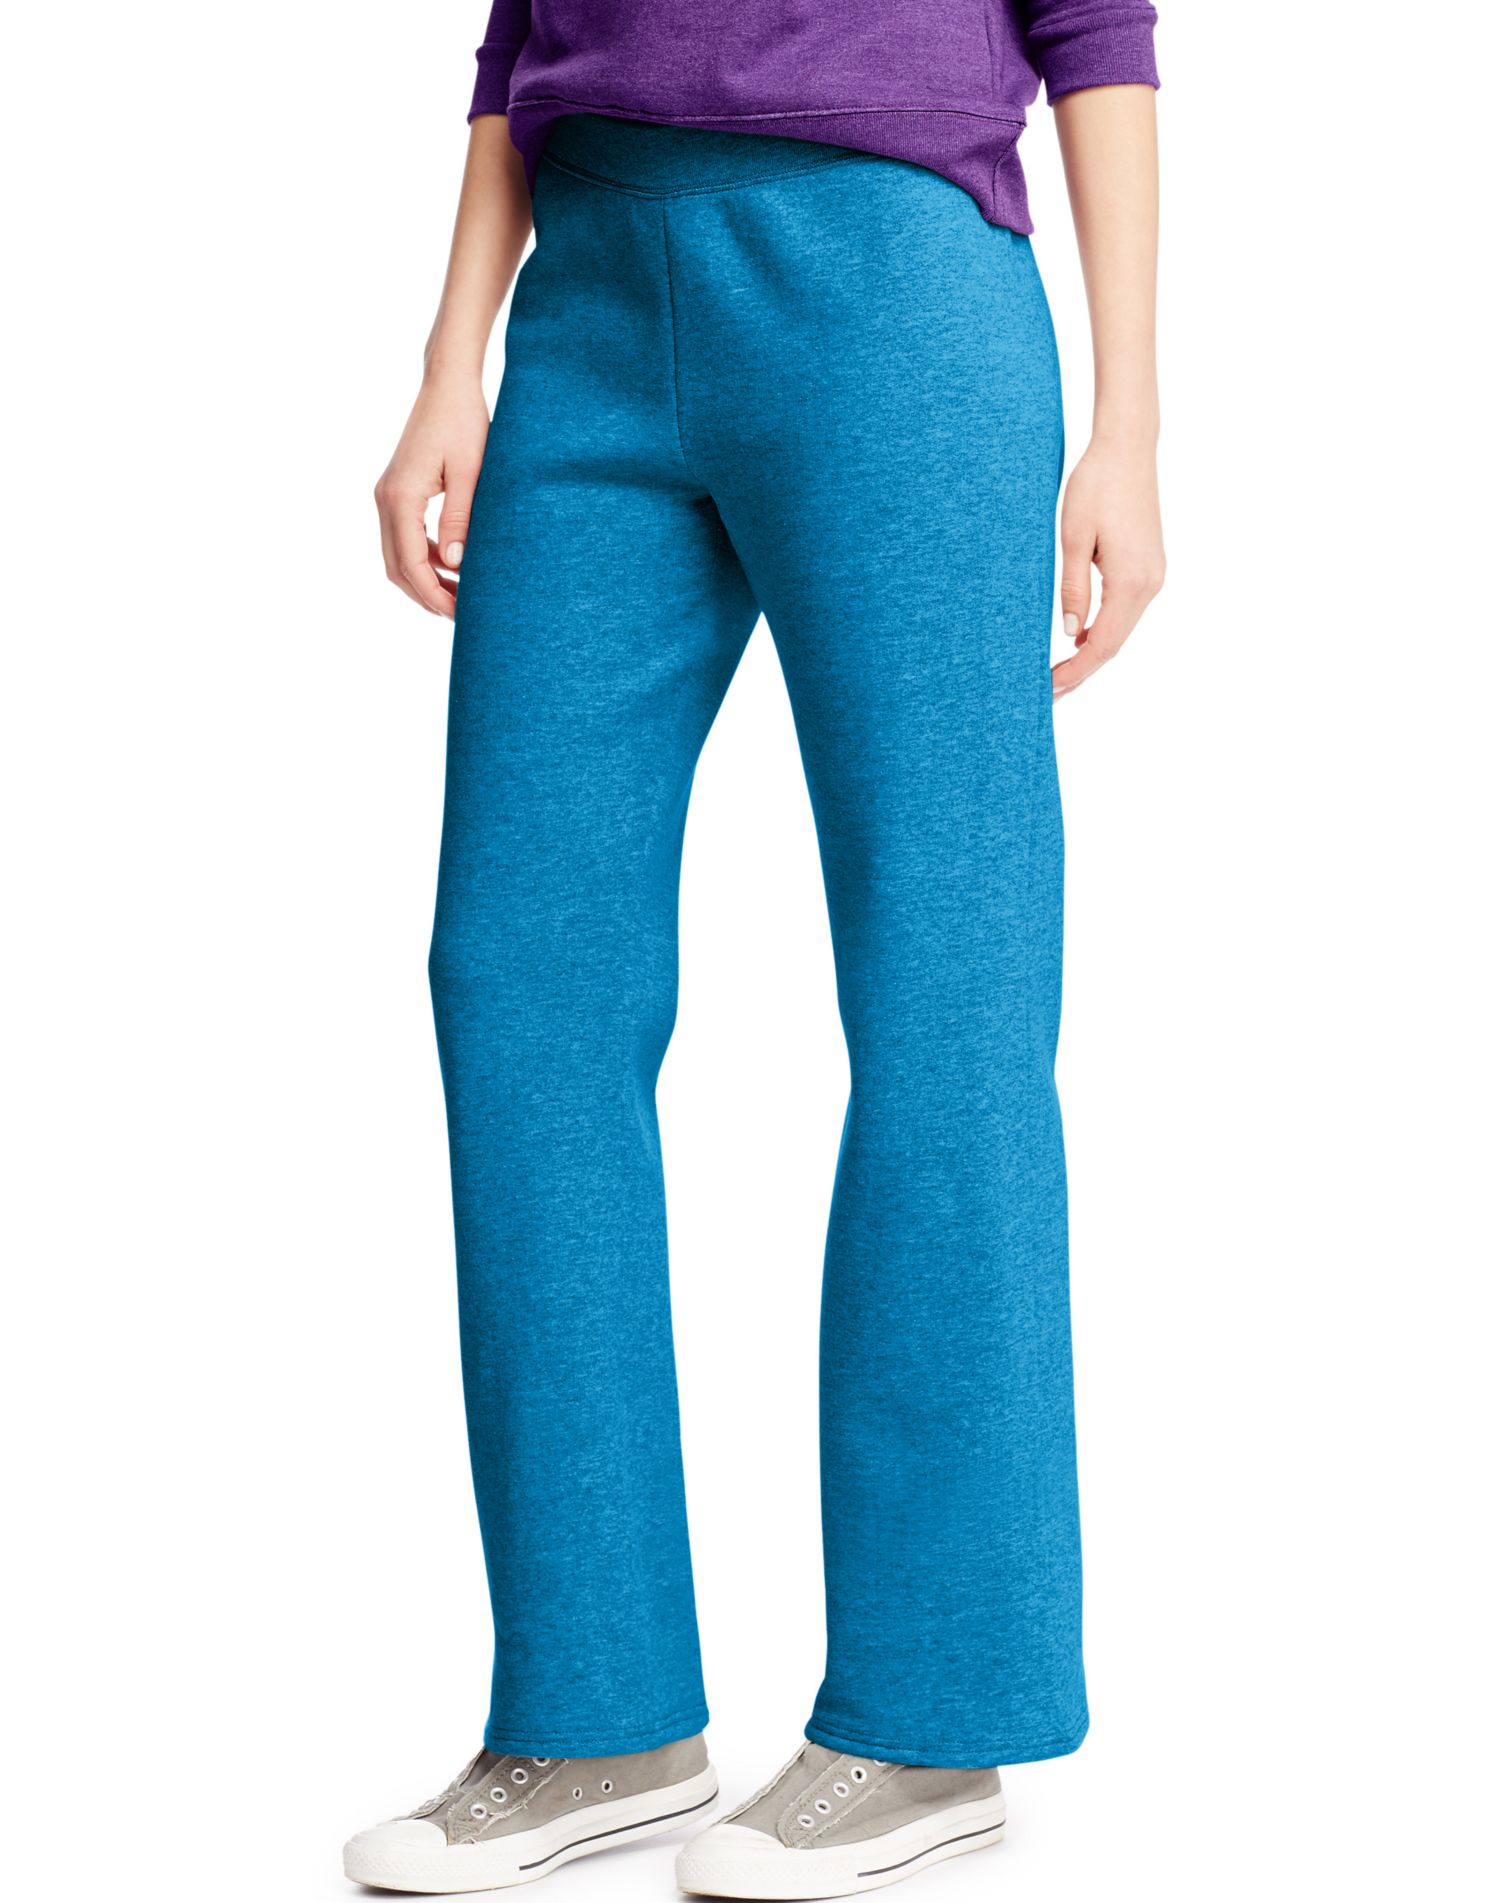 Hanes Women's Sweatpants, ComfortSoft EcoSmart Open Leg Fleece Sweatpants